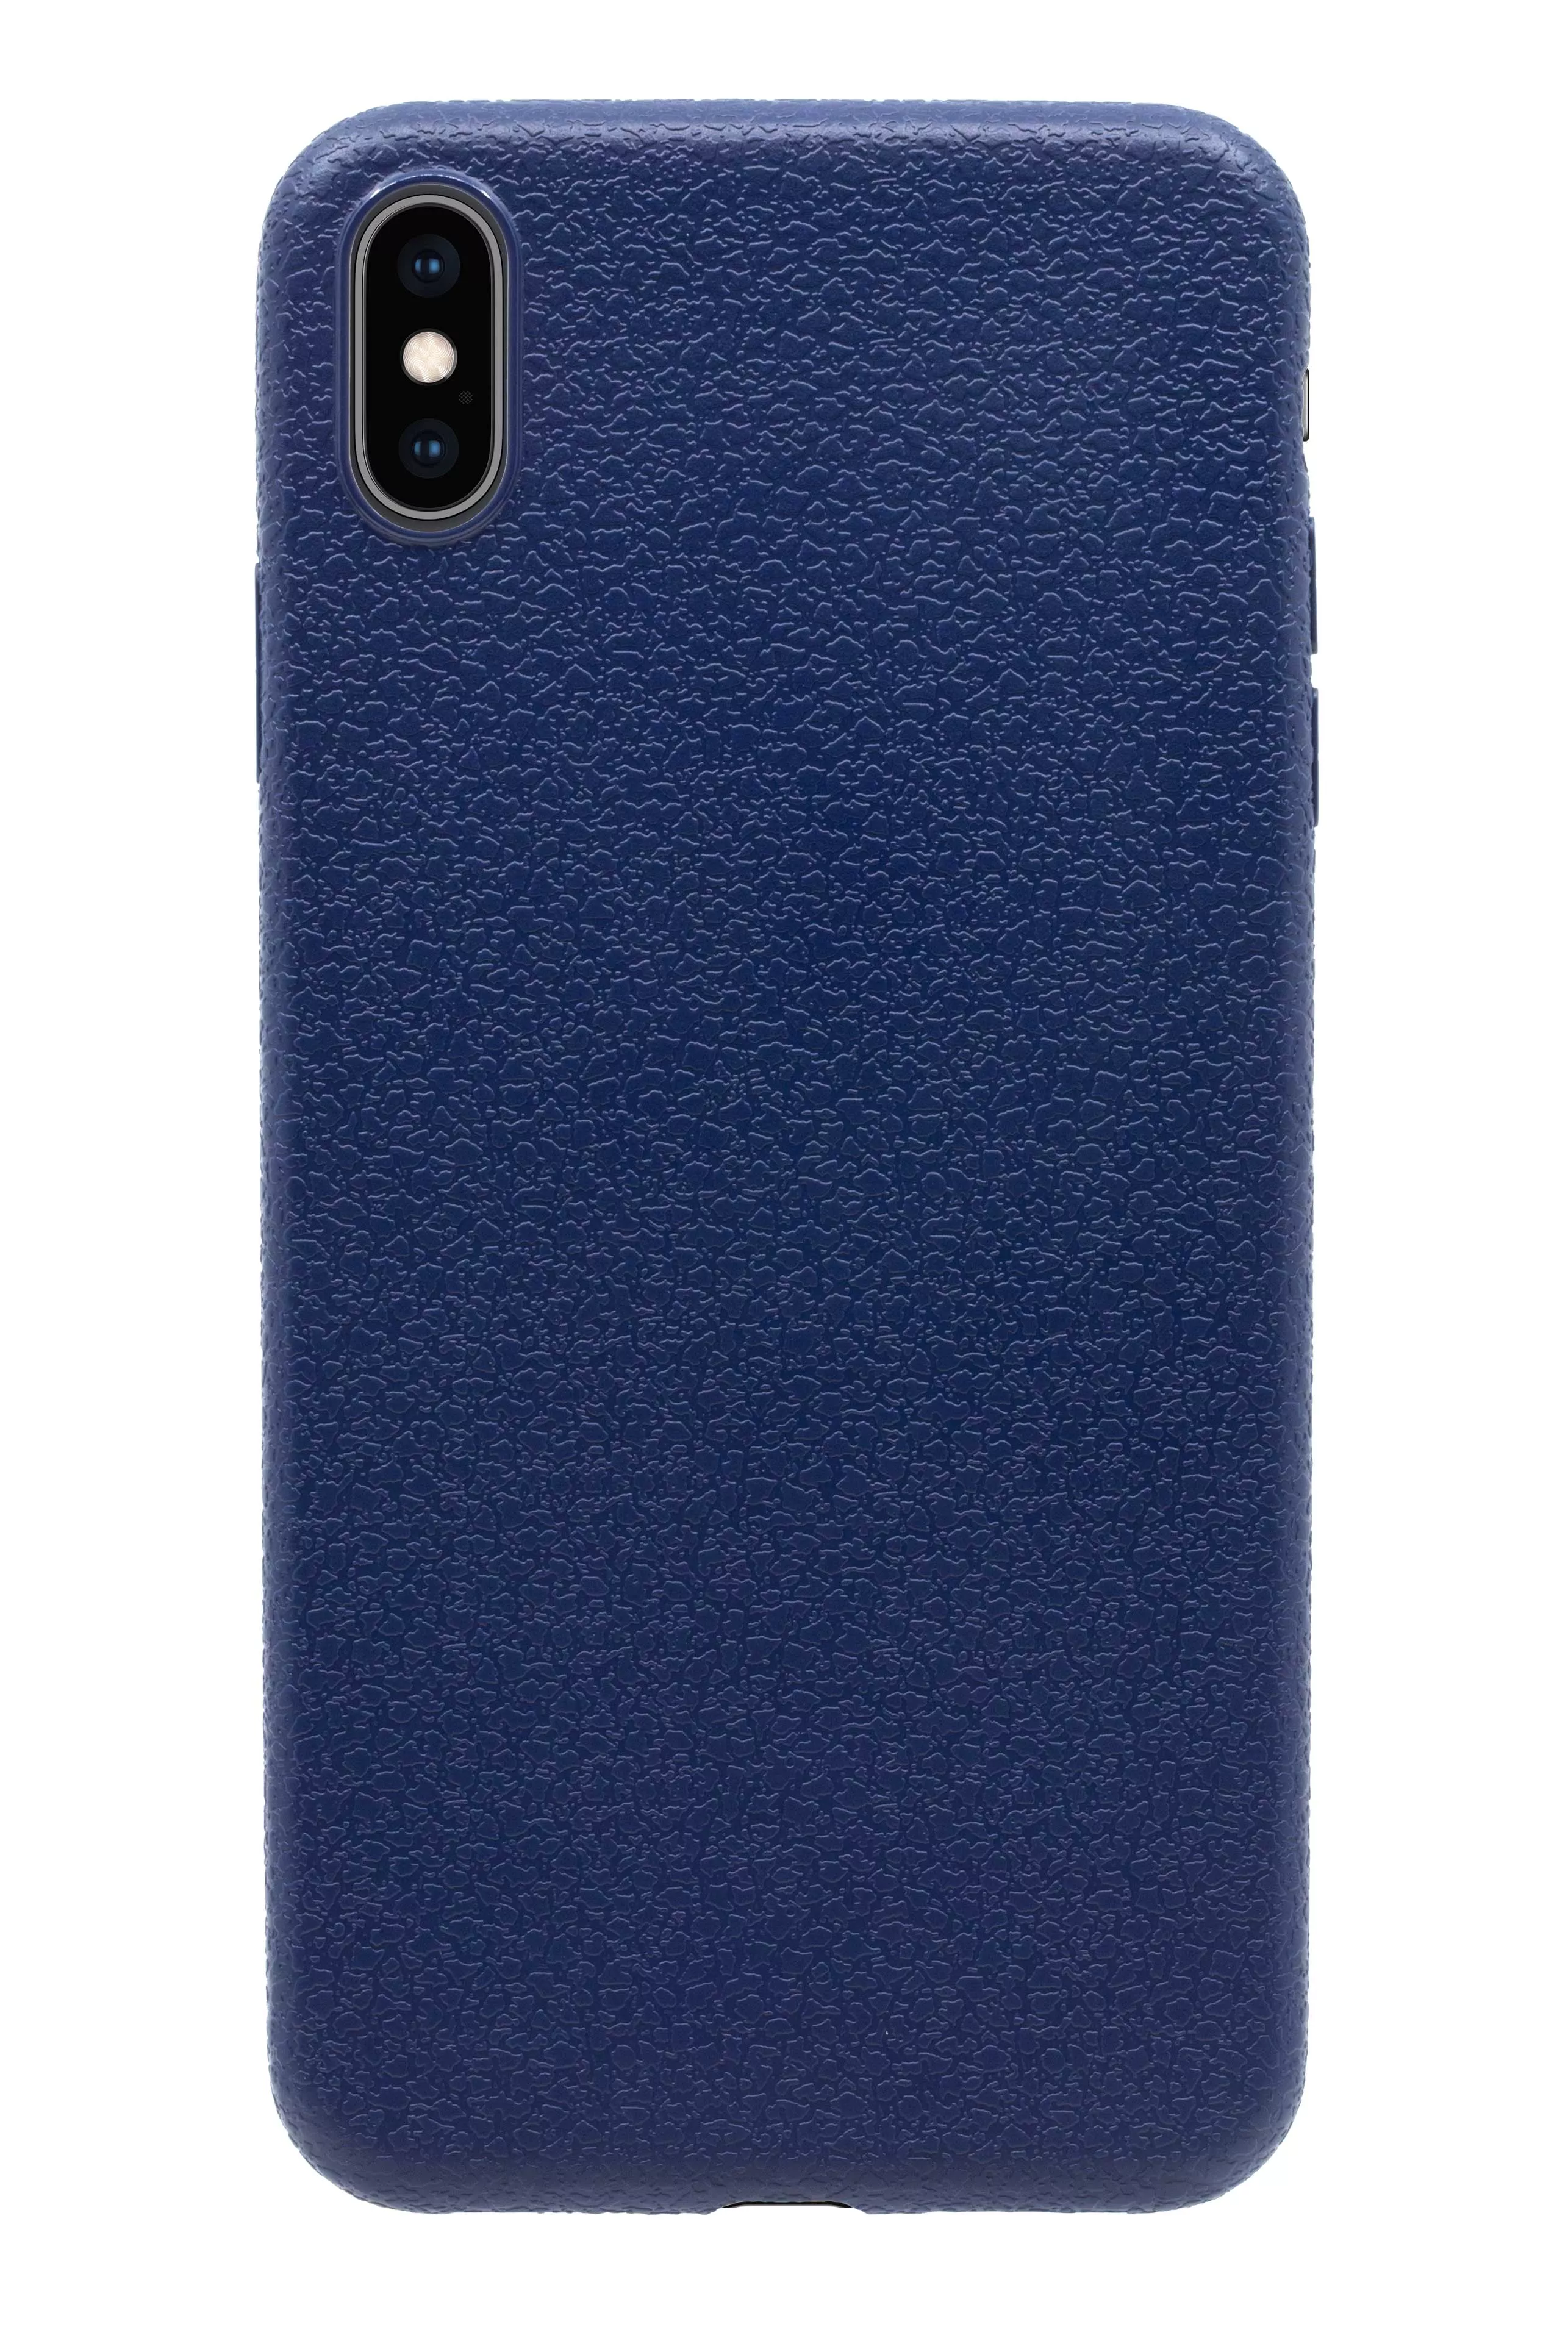 Чехол прорезиненный с тиснением под кожу для iPhone XS Max - Темно-синий. Вид 1